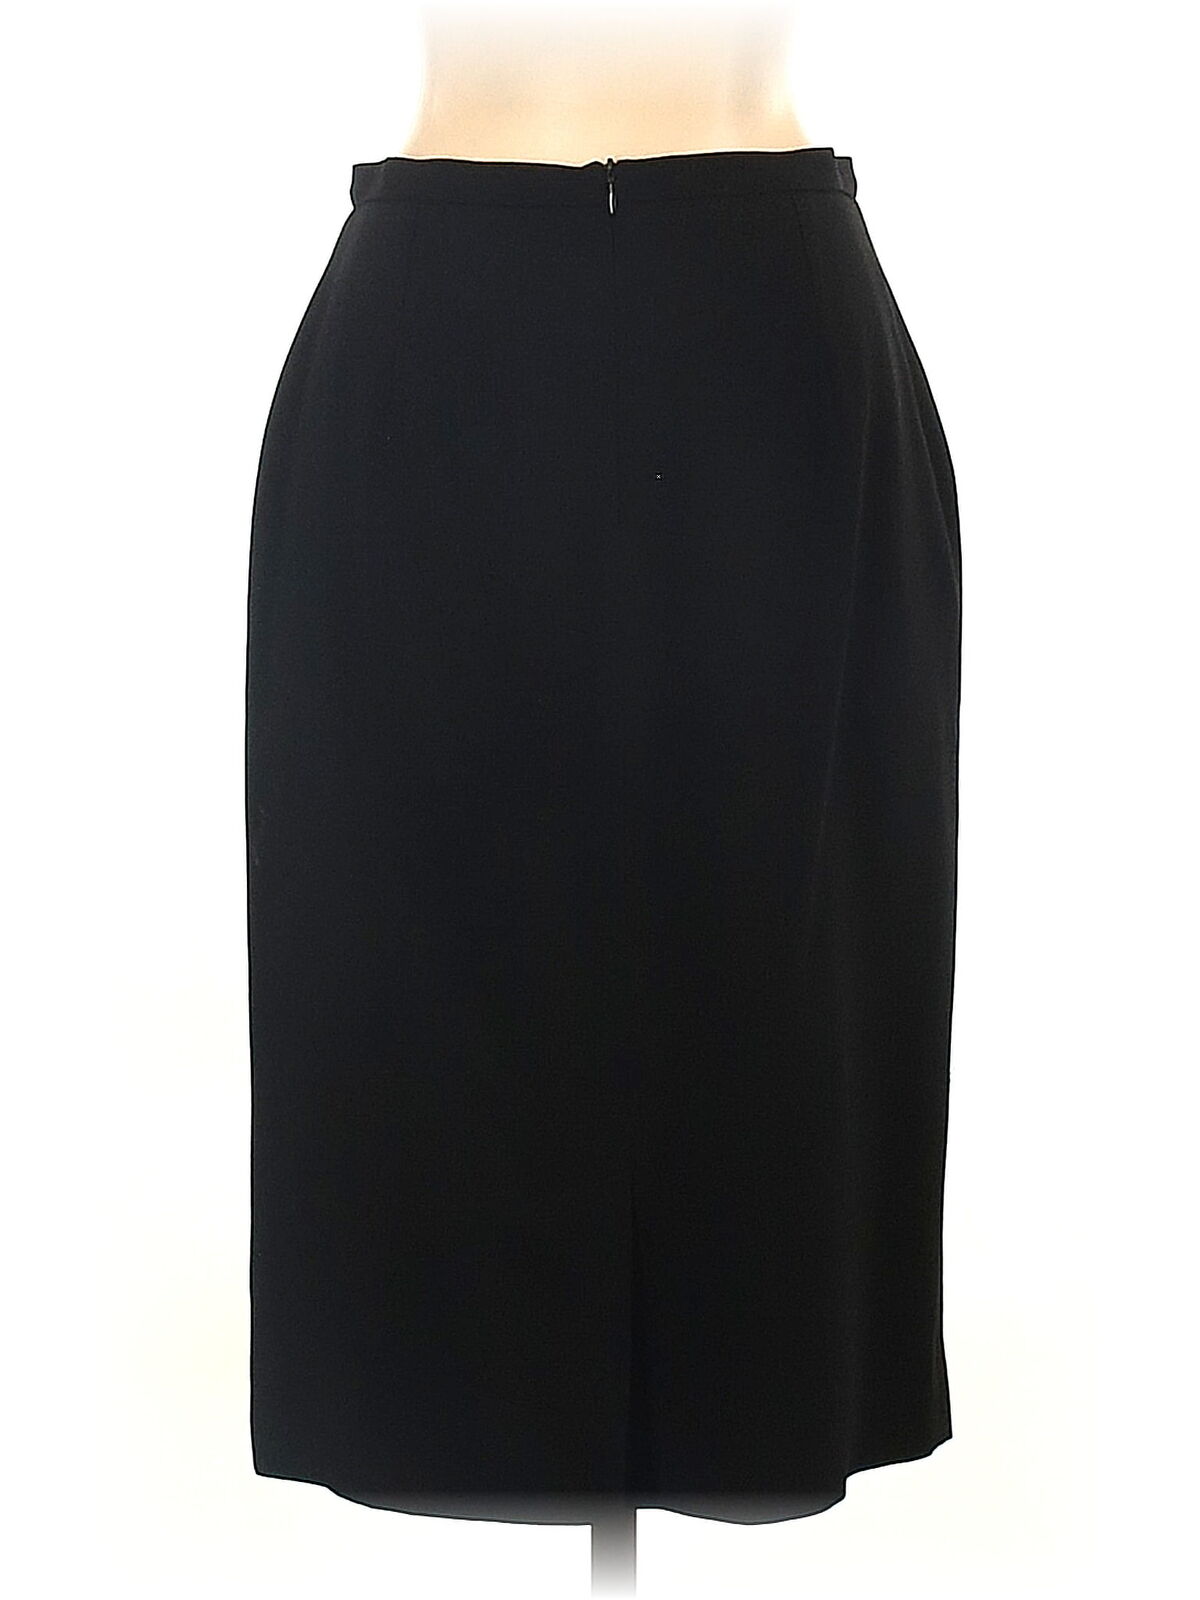 Max Mara Women Black Casual Skirt 2 - image 2